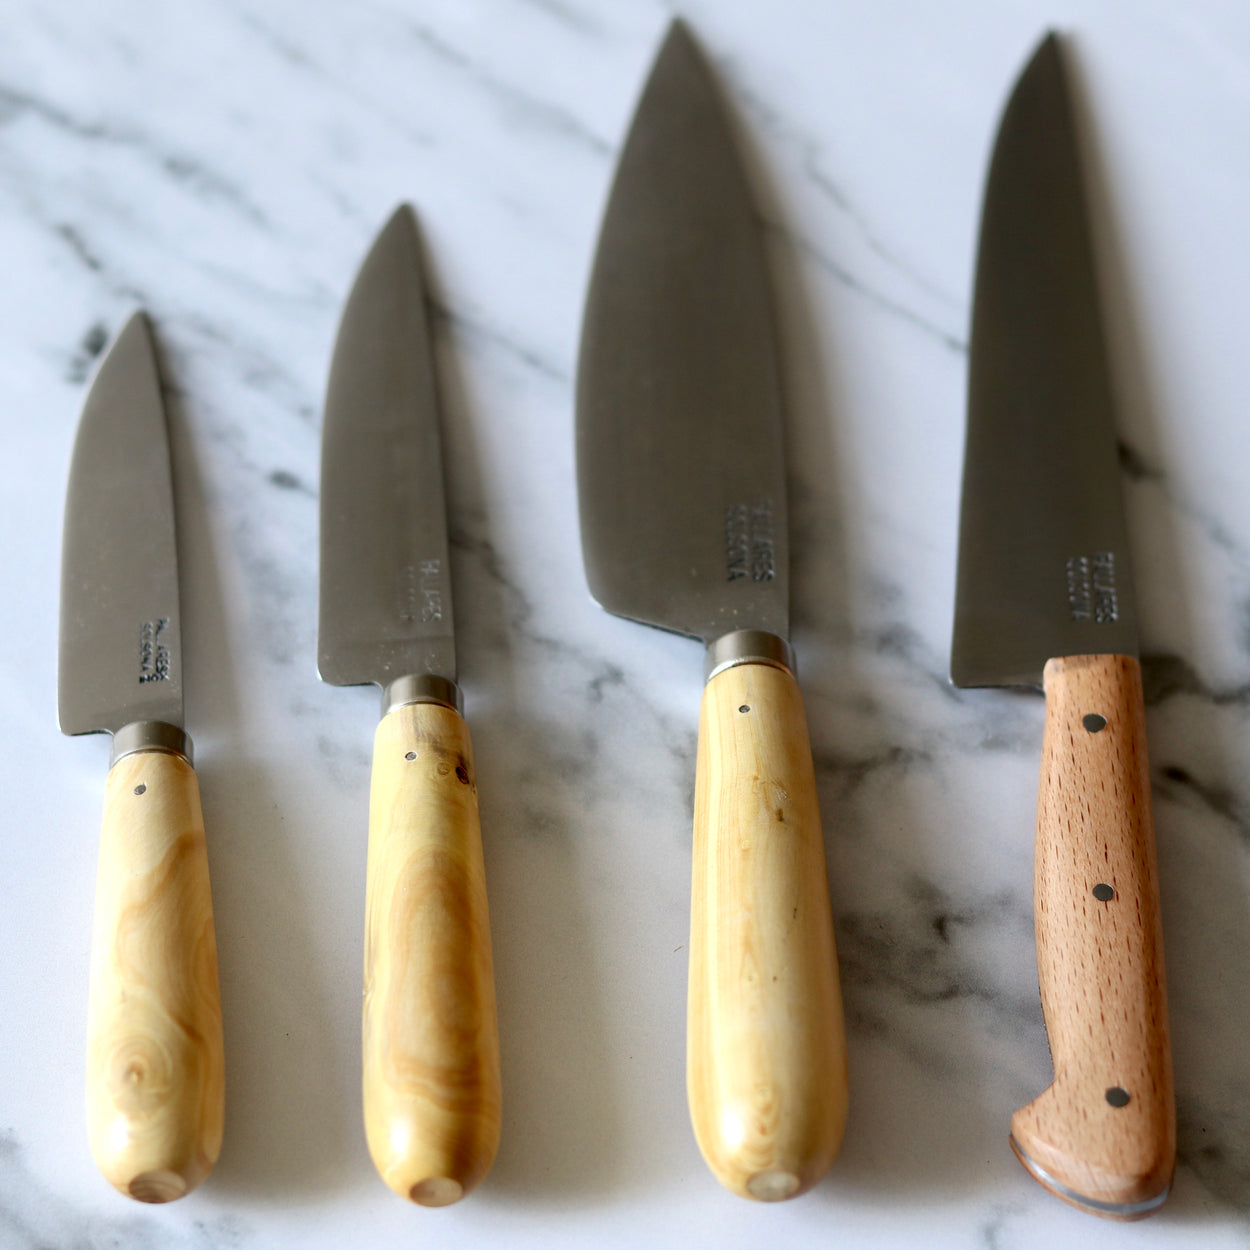 Pallarès Solsona classic kitchen knife, carbon, 16cm